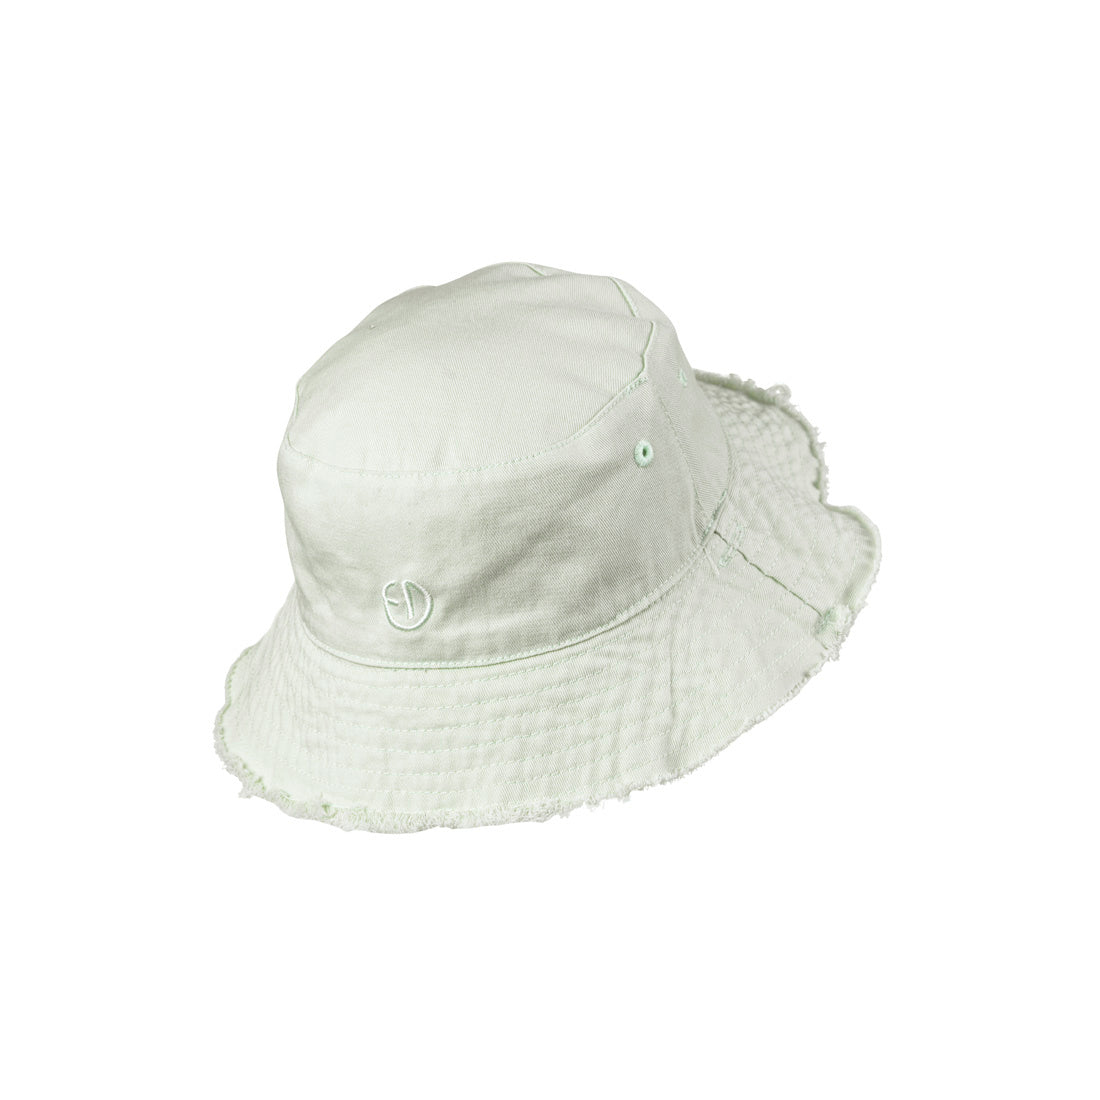 Деталі ELODIE - капелюх капелюх - Gelato Green - 1-2 роки